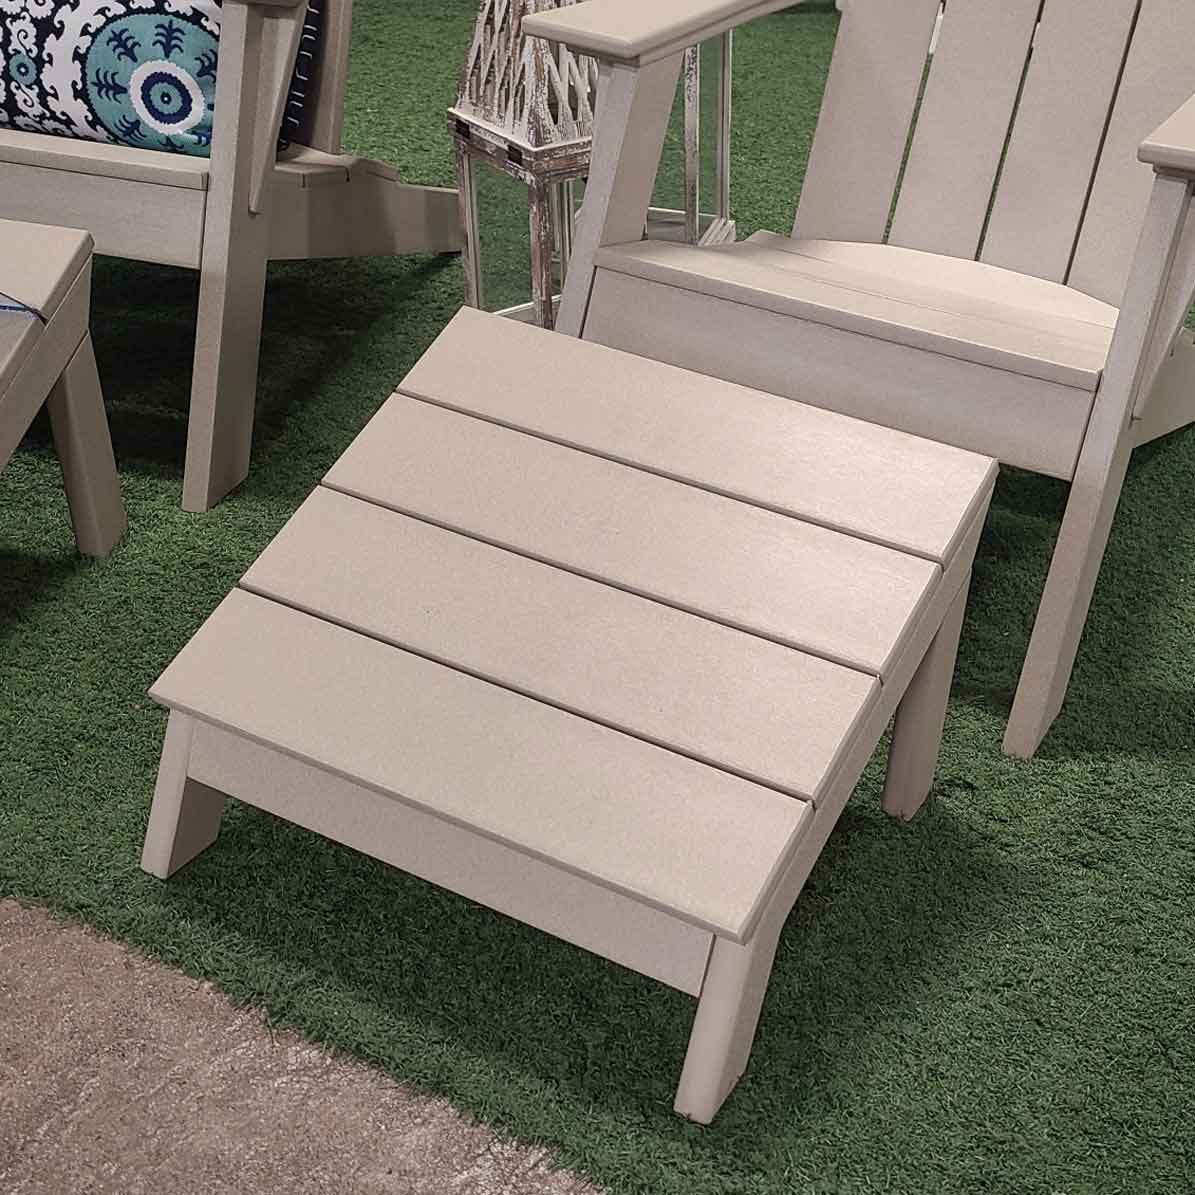 https://www.sunnylandfurniture.com/c/Outdoor-Furniture/28/Adirondack-Chairs/product_images/72120210311_134347_resized.jpg